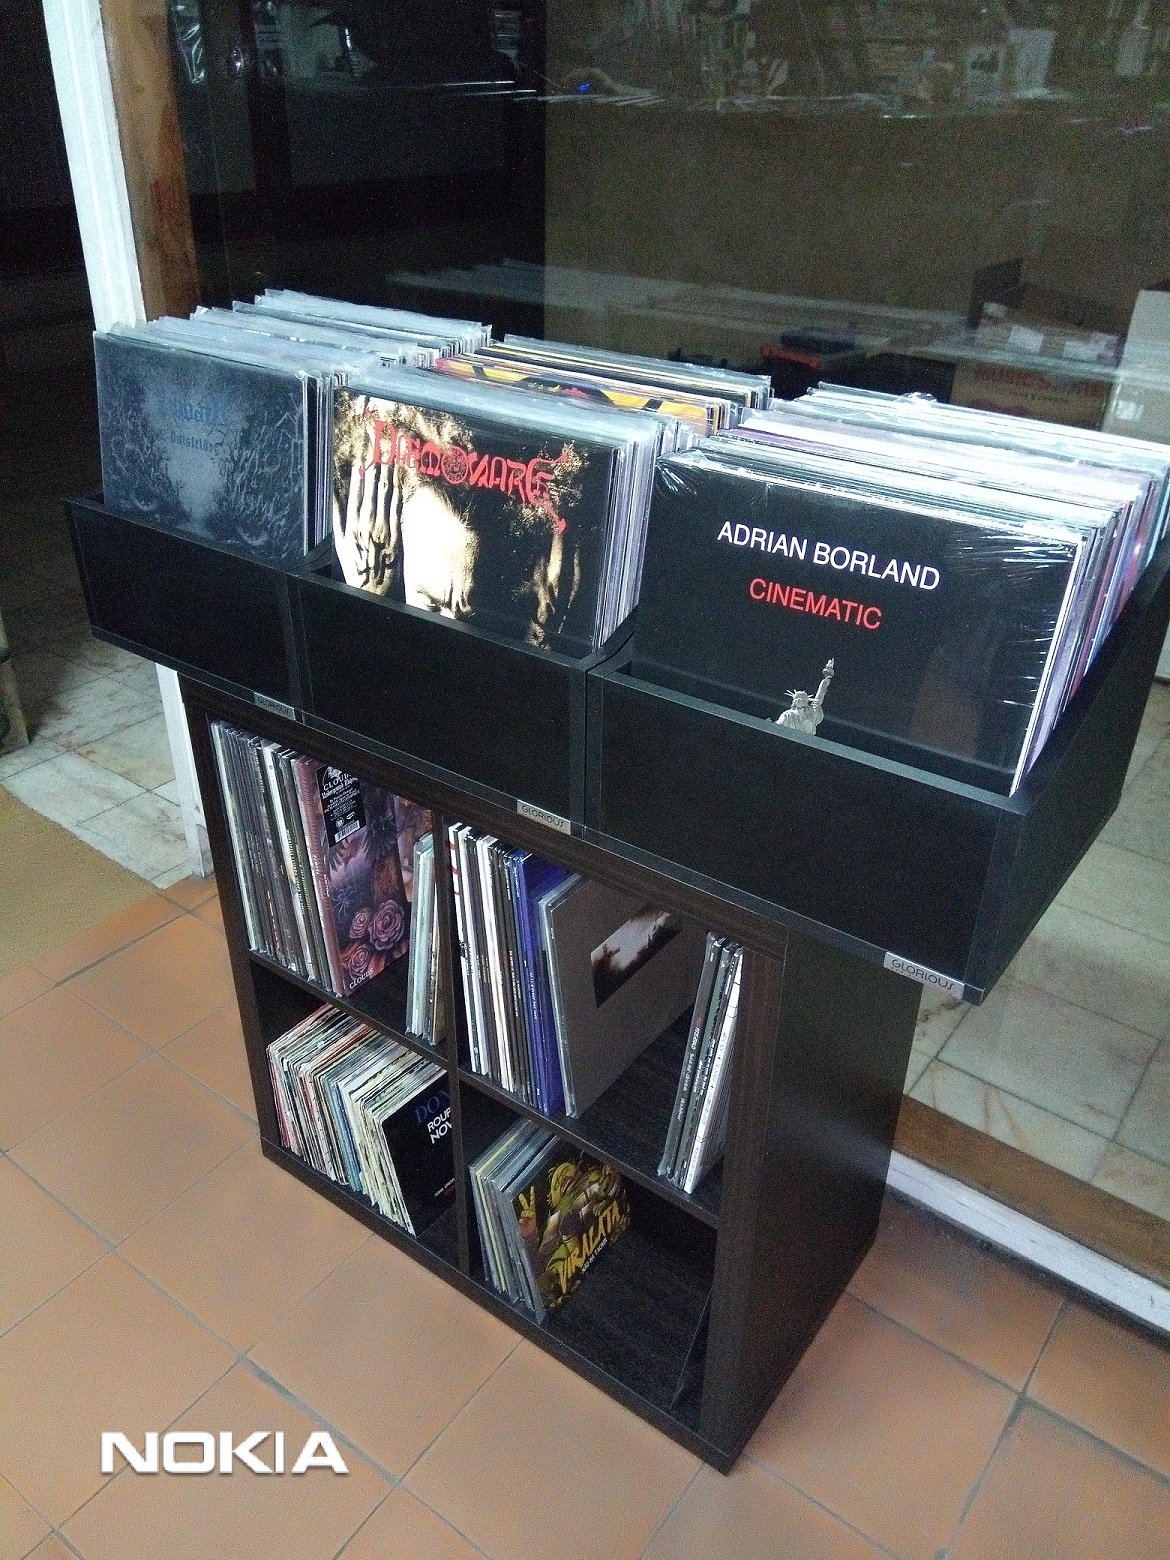 Piranha Record Store - 2 of 5